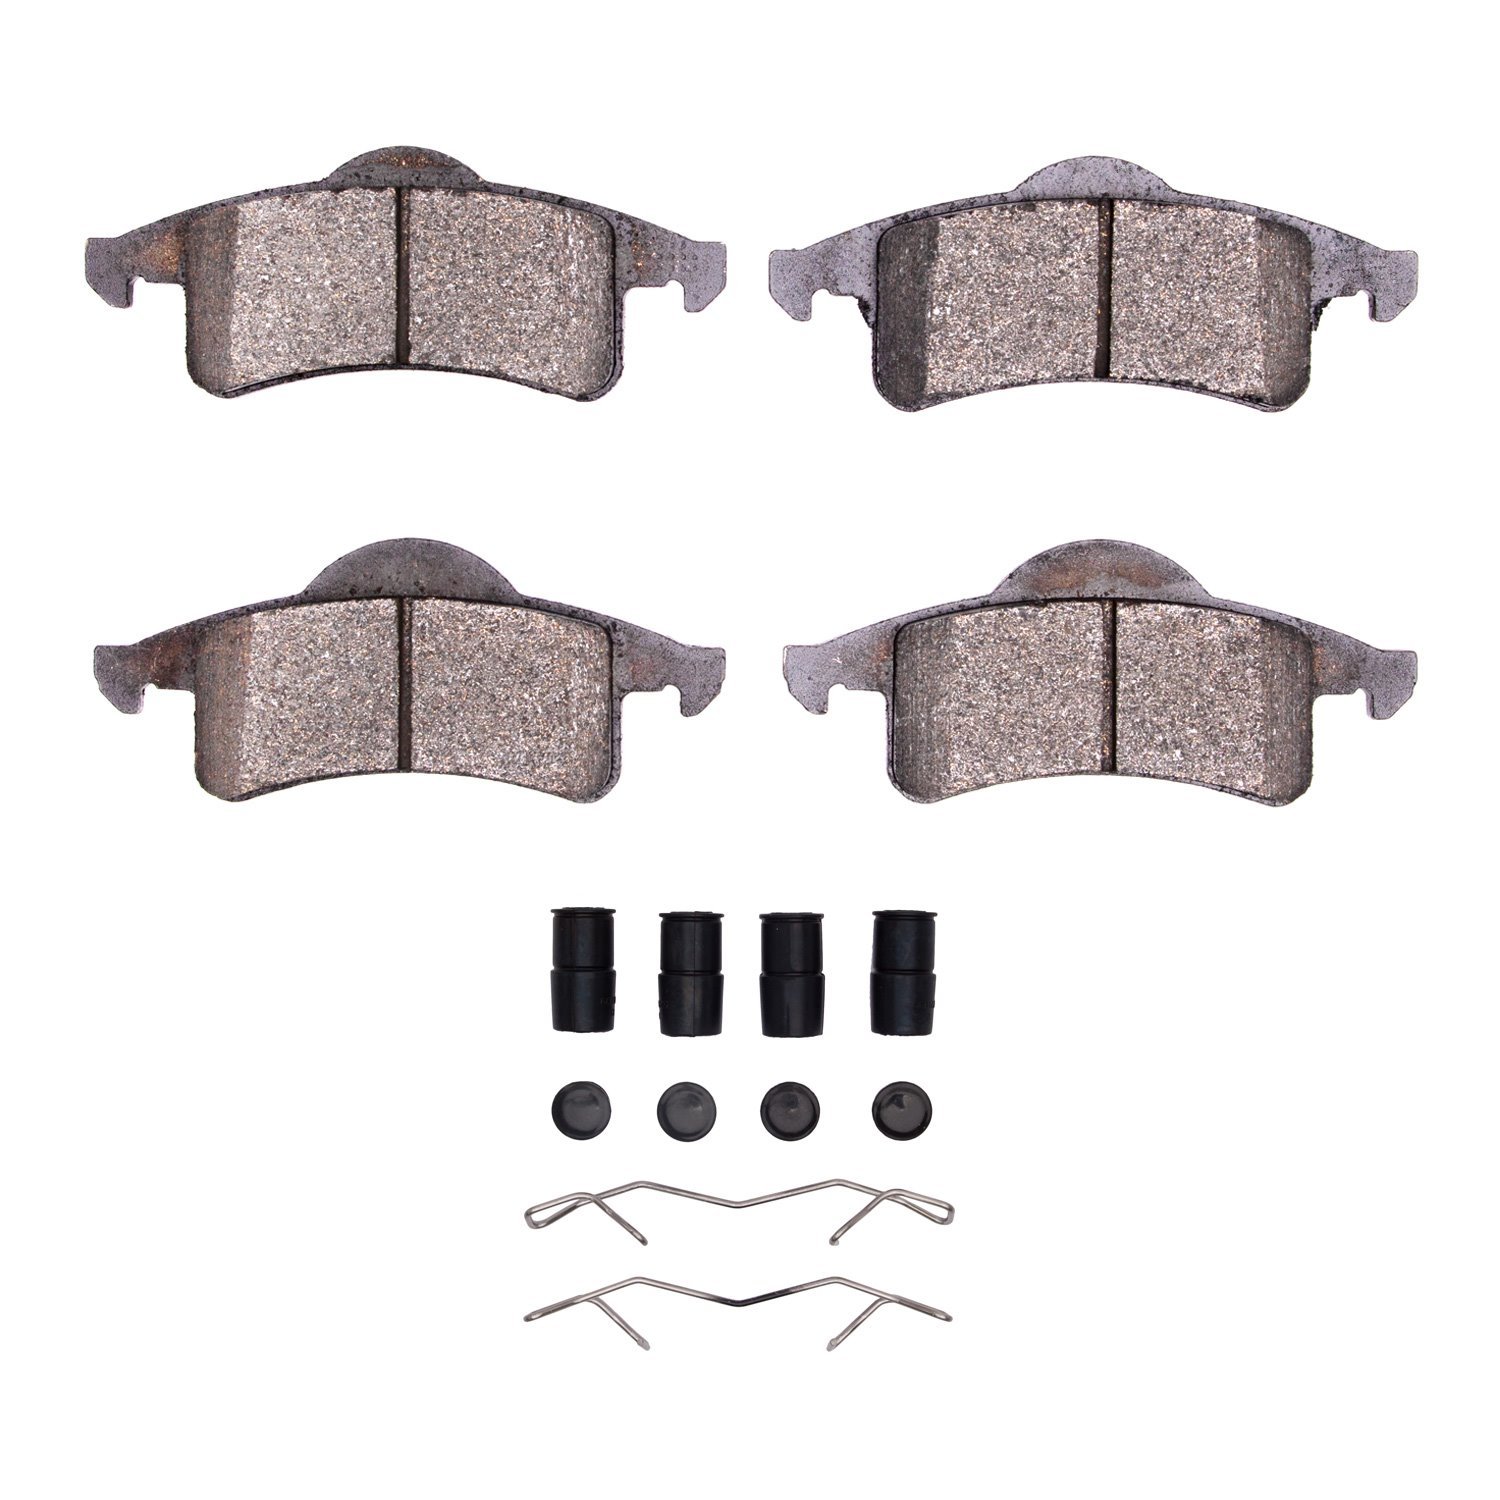 1310-0791-01 3000-Series Ceramic Brake Pads & Hardware Kit, 1999-2004 Mopar, Position: Rear